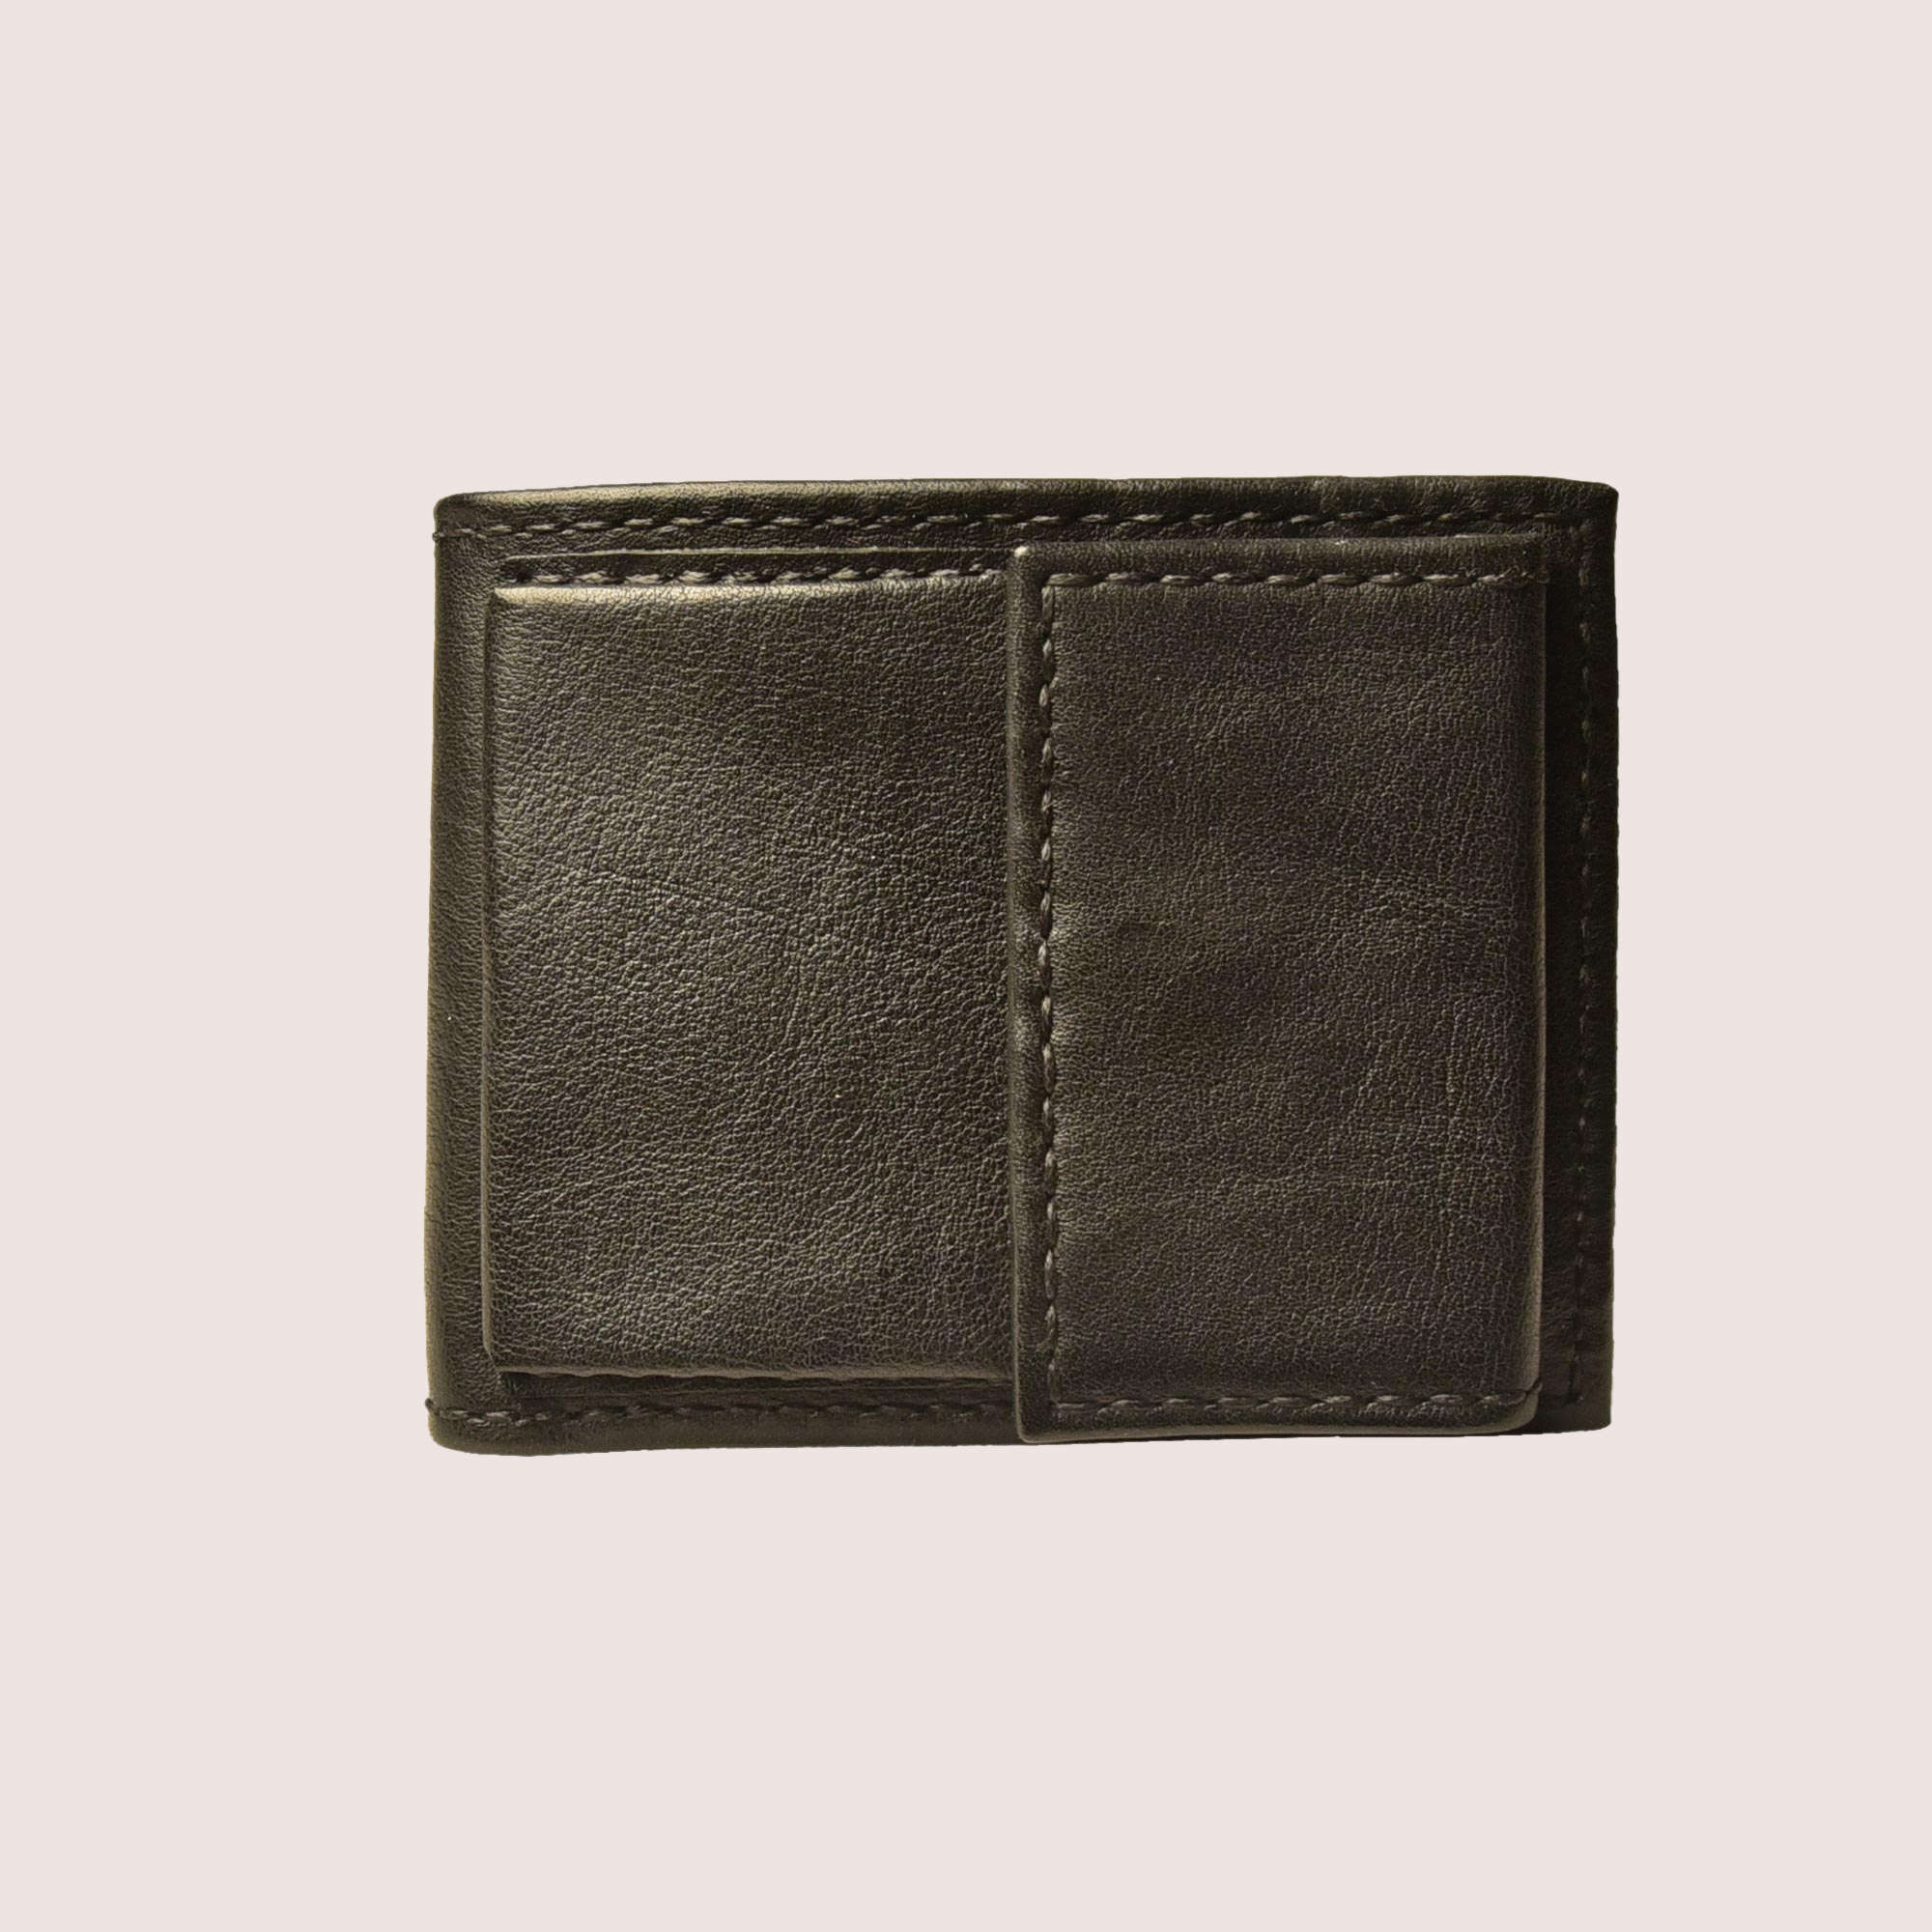 Fitzgerald Hand-Stitched Wallet